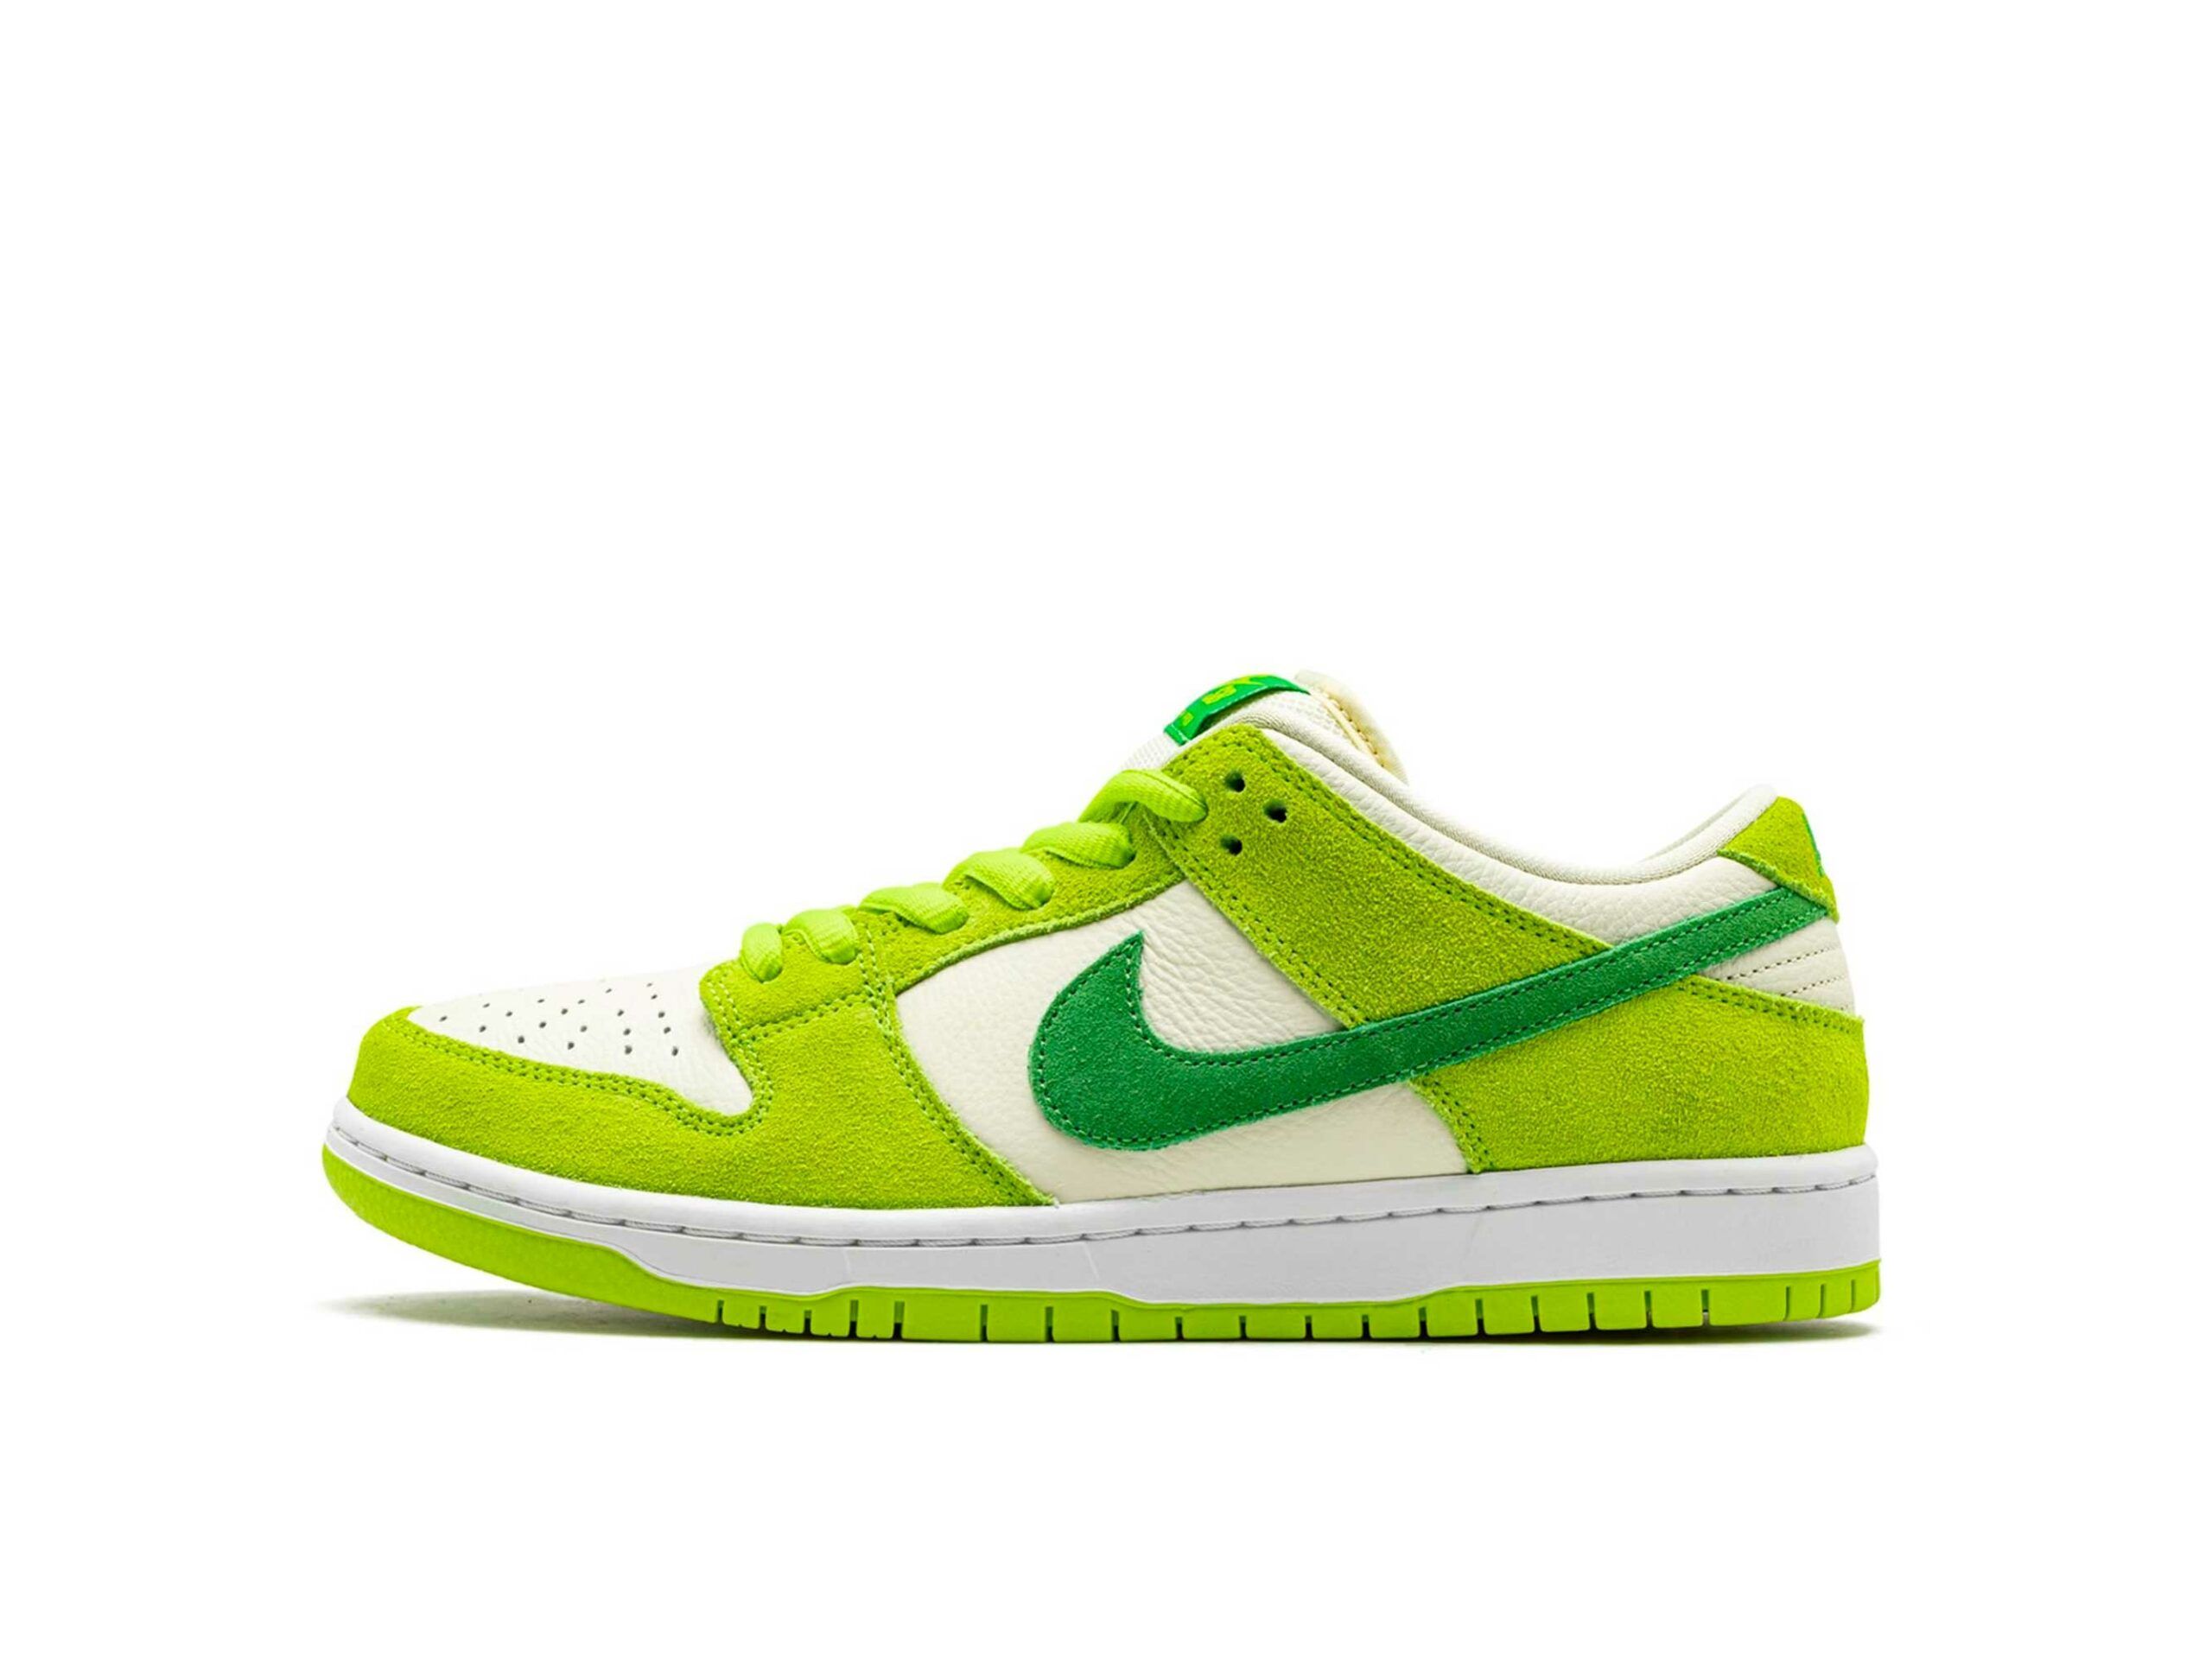 Nike dunk low pro оригинал. Nike SB Dunk Low Green. Nike SB Dunk Low Green Apple. Кроссовки Nike SB Dunk Low Green Apple. Nike Dunk Low Pro Green.